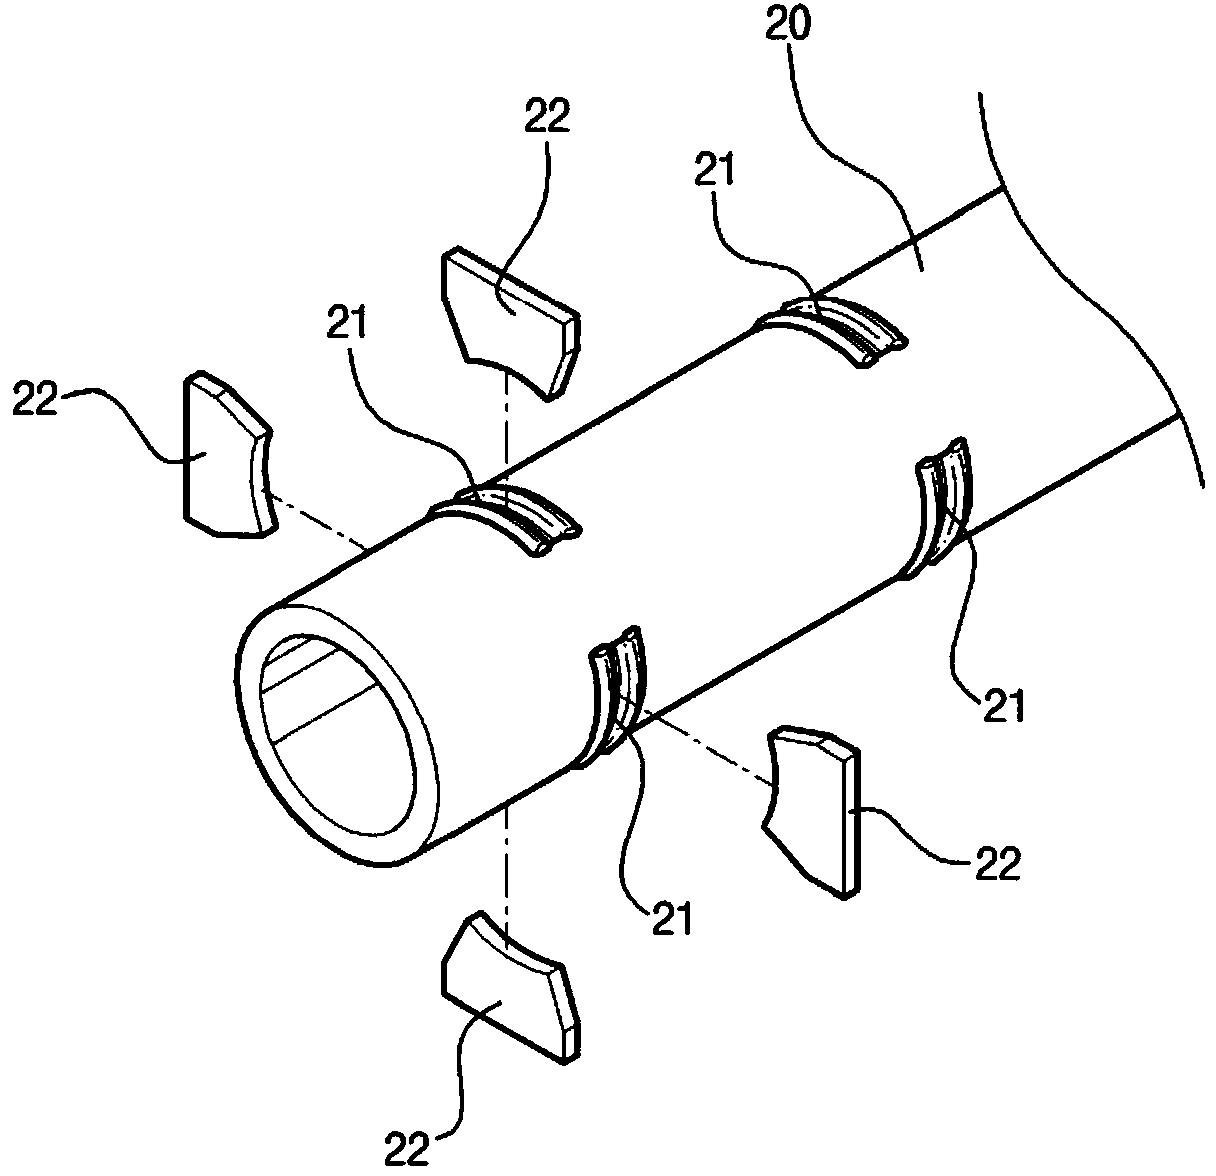 Method of manufacturing camshaft